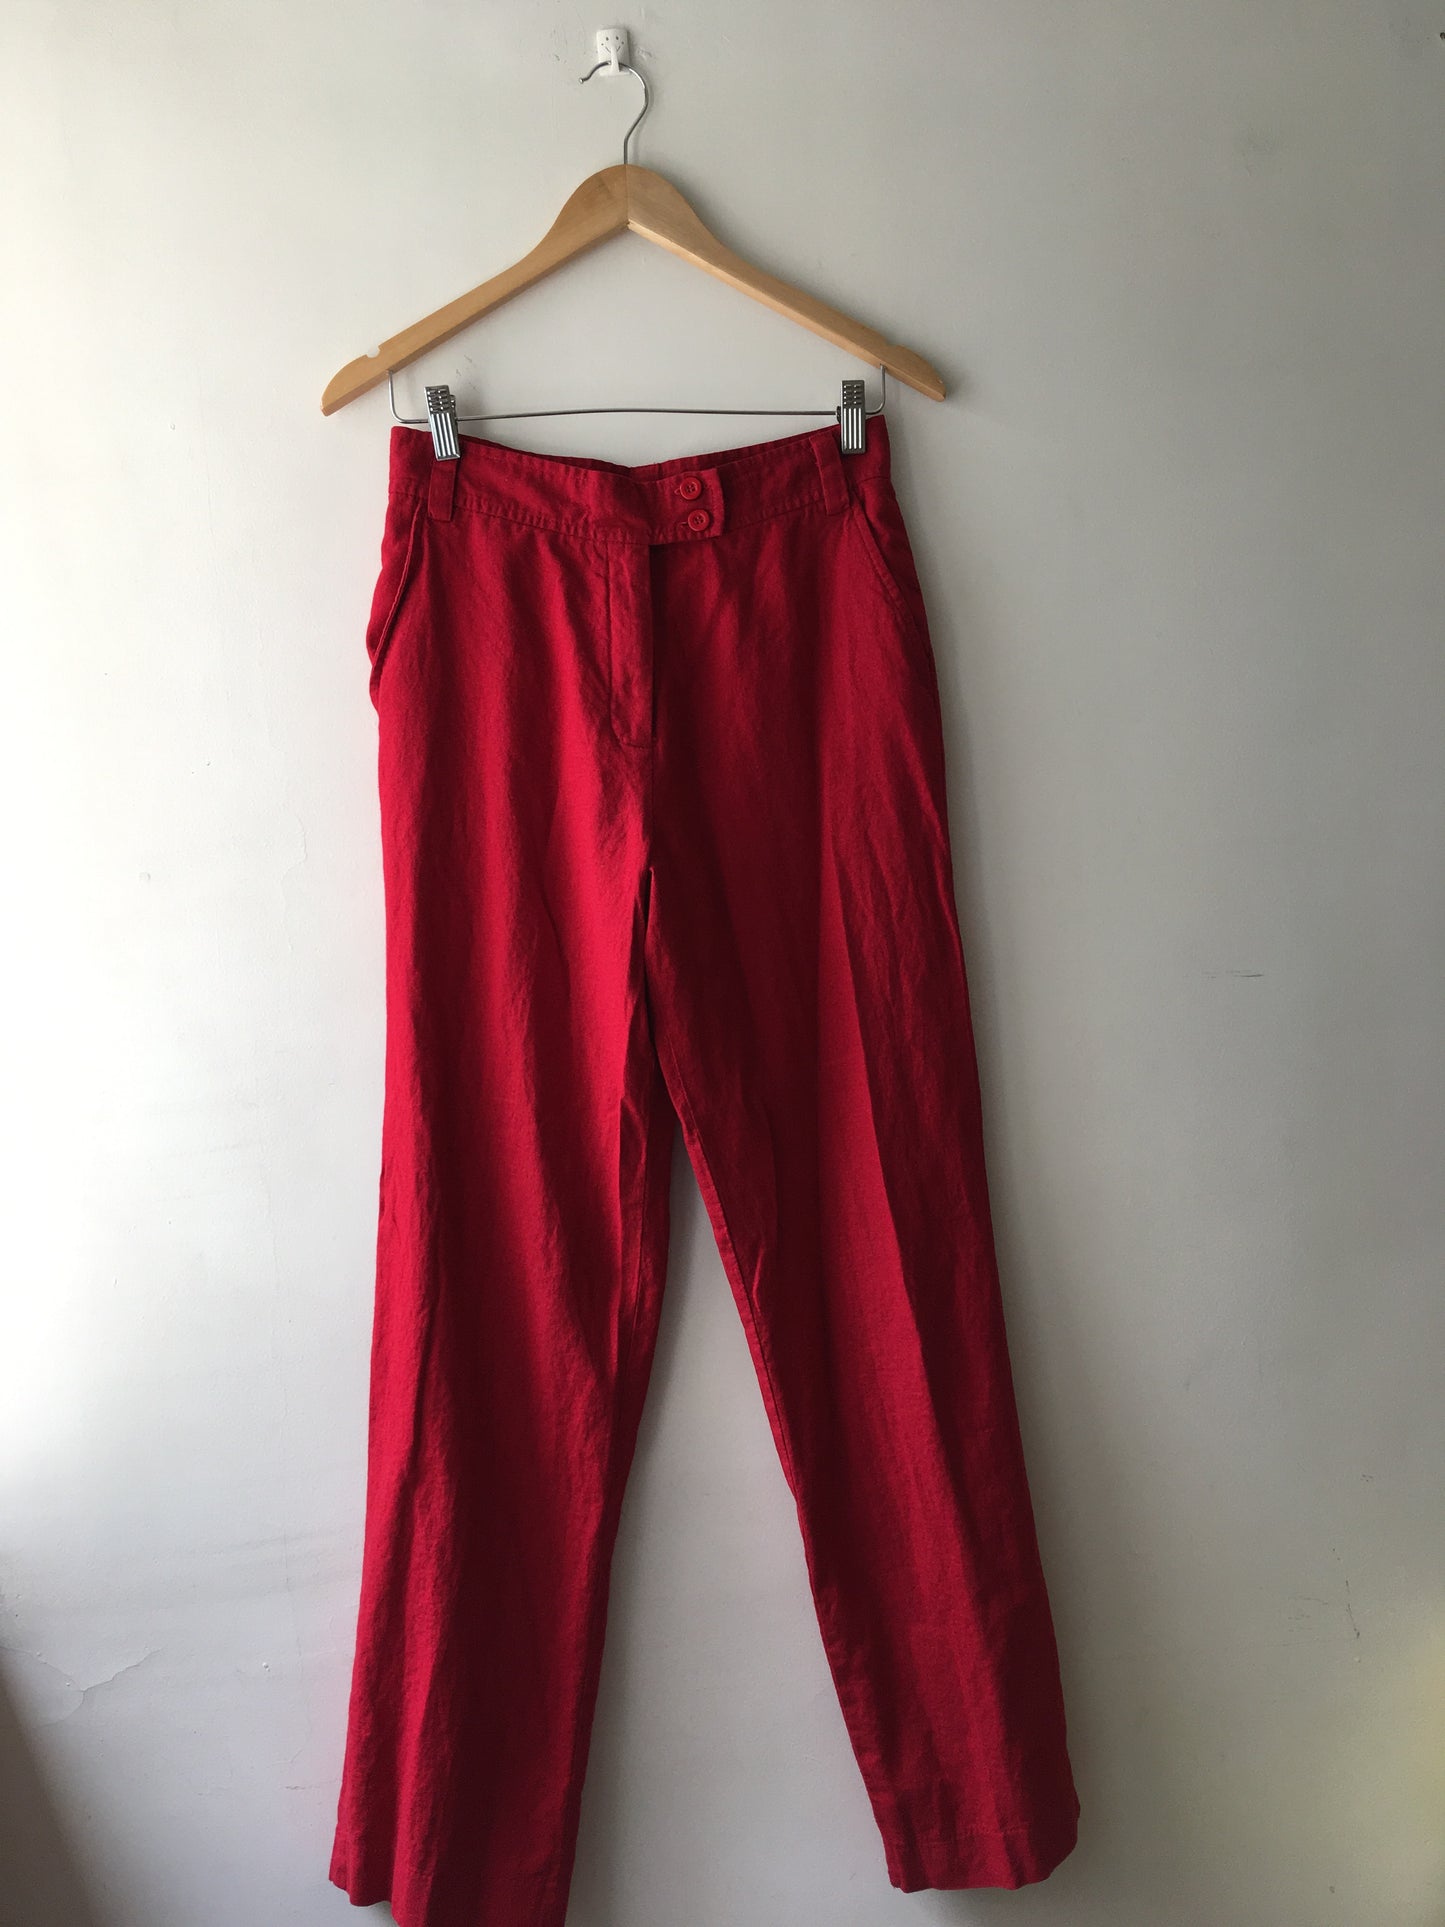 Chidx Red Pants